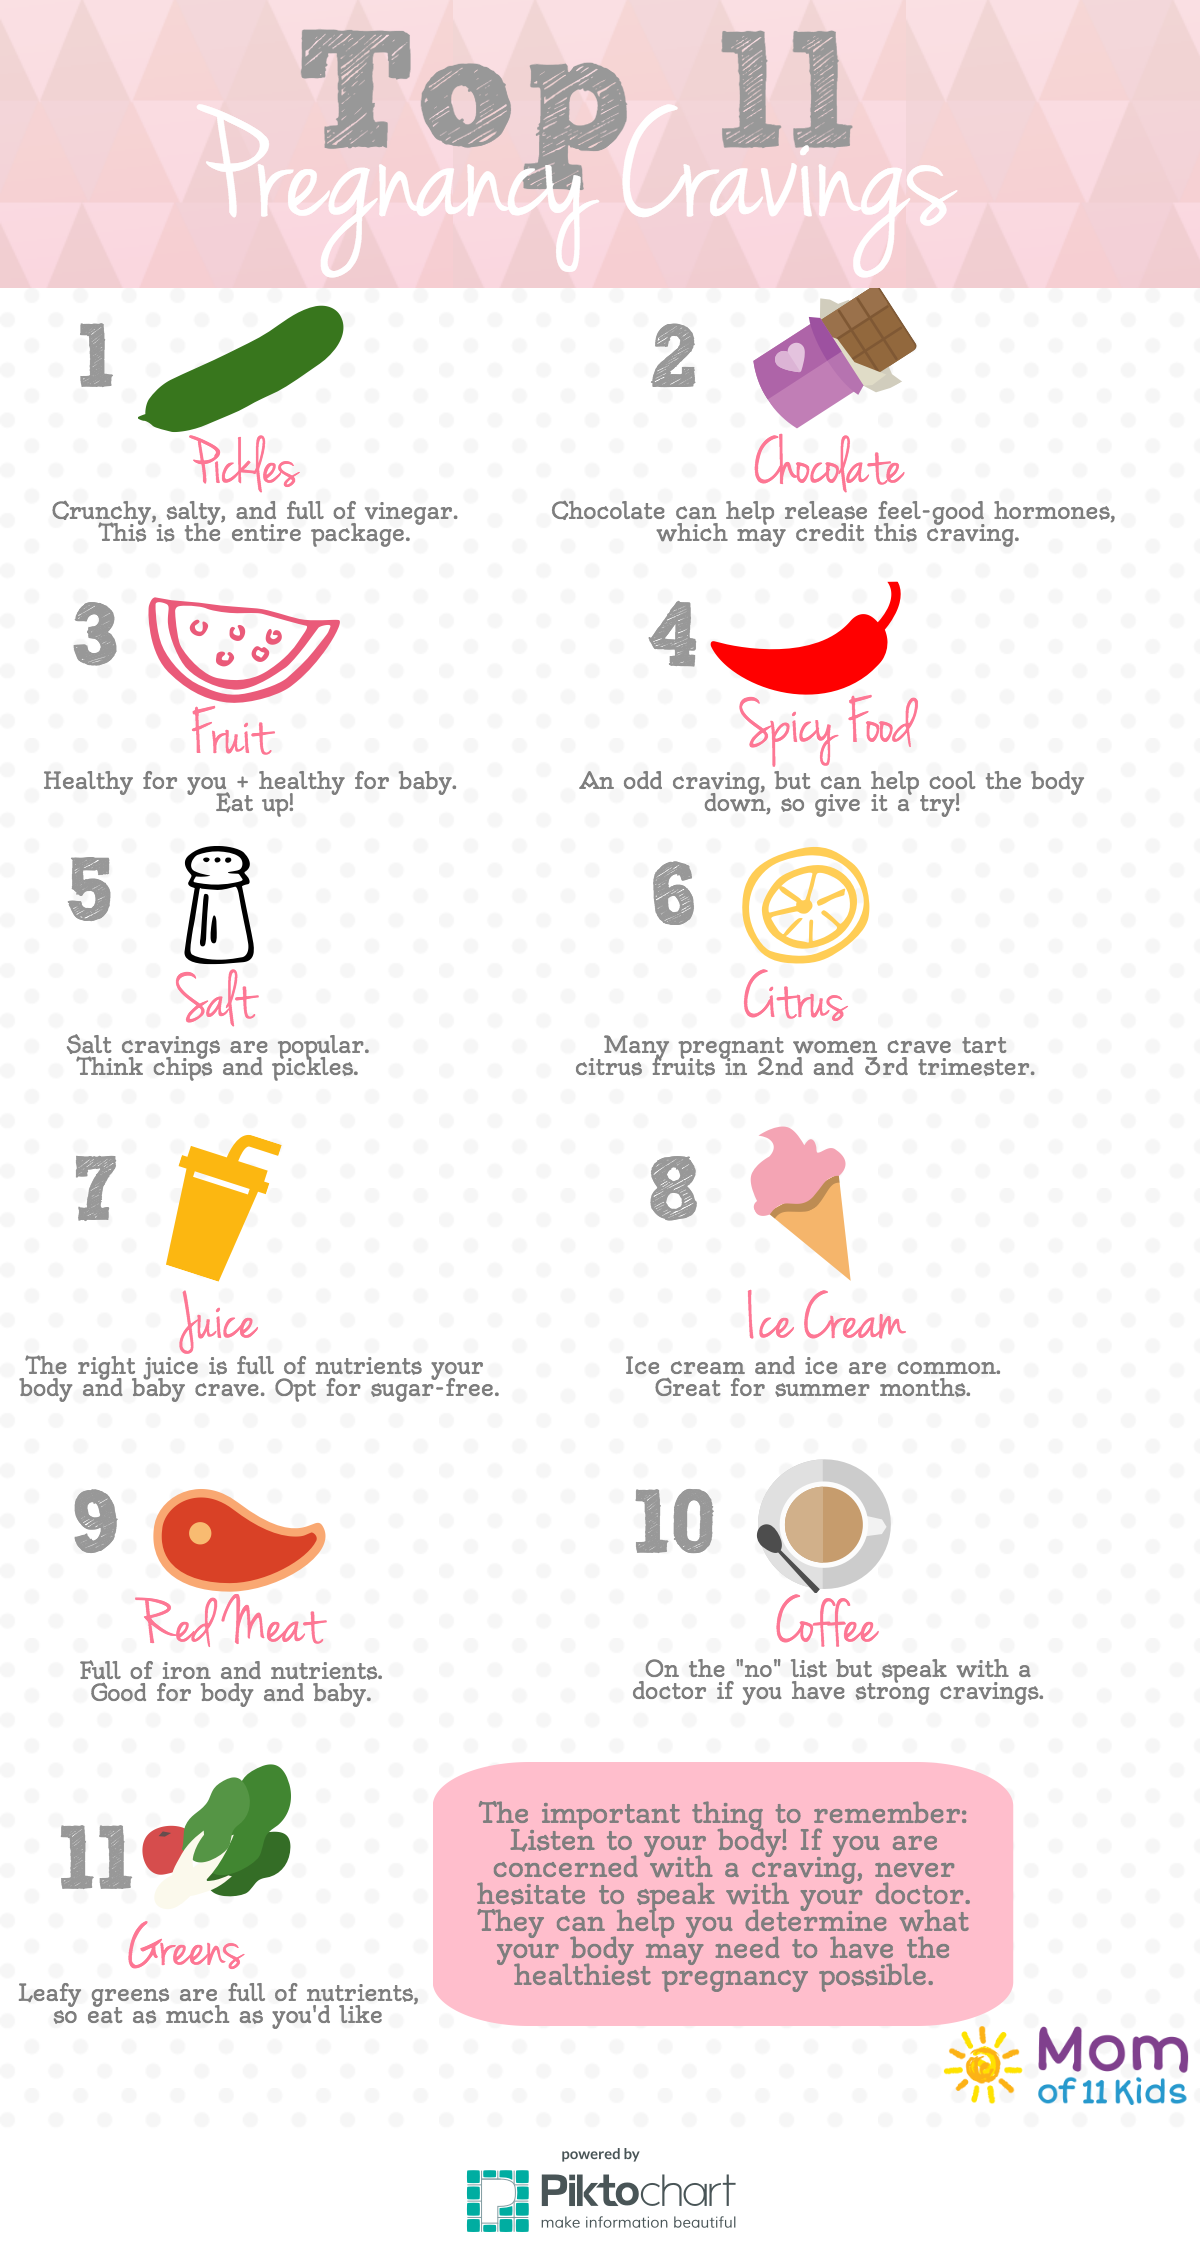 11 Pregnancy Cravings (1)